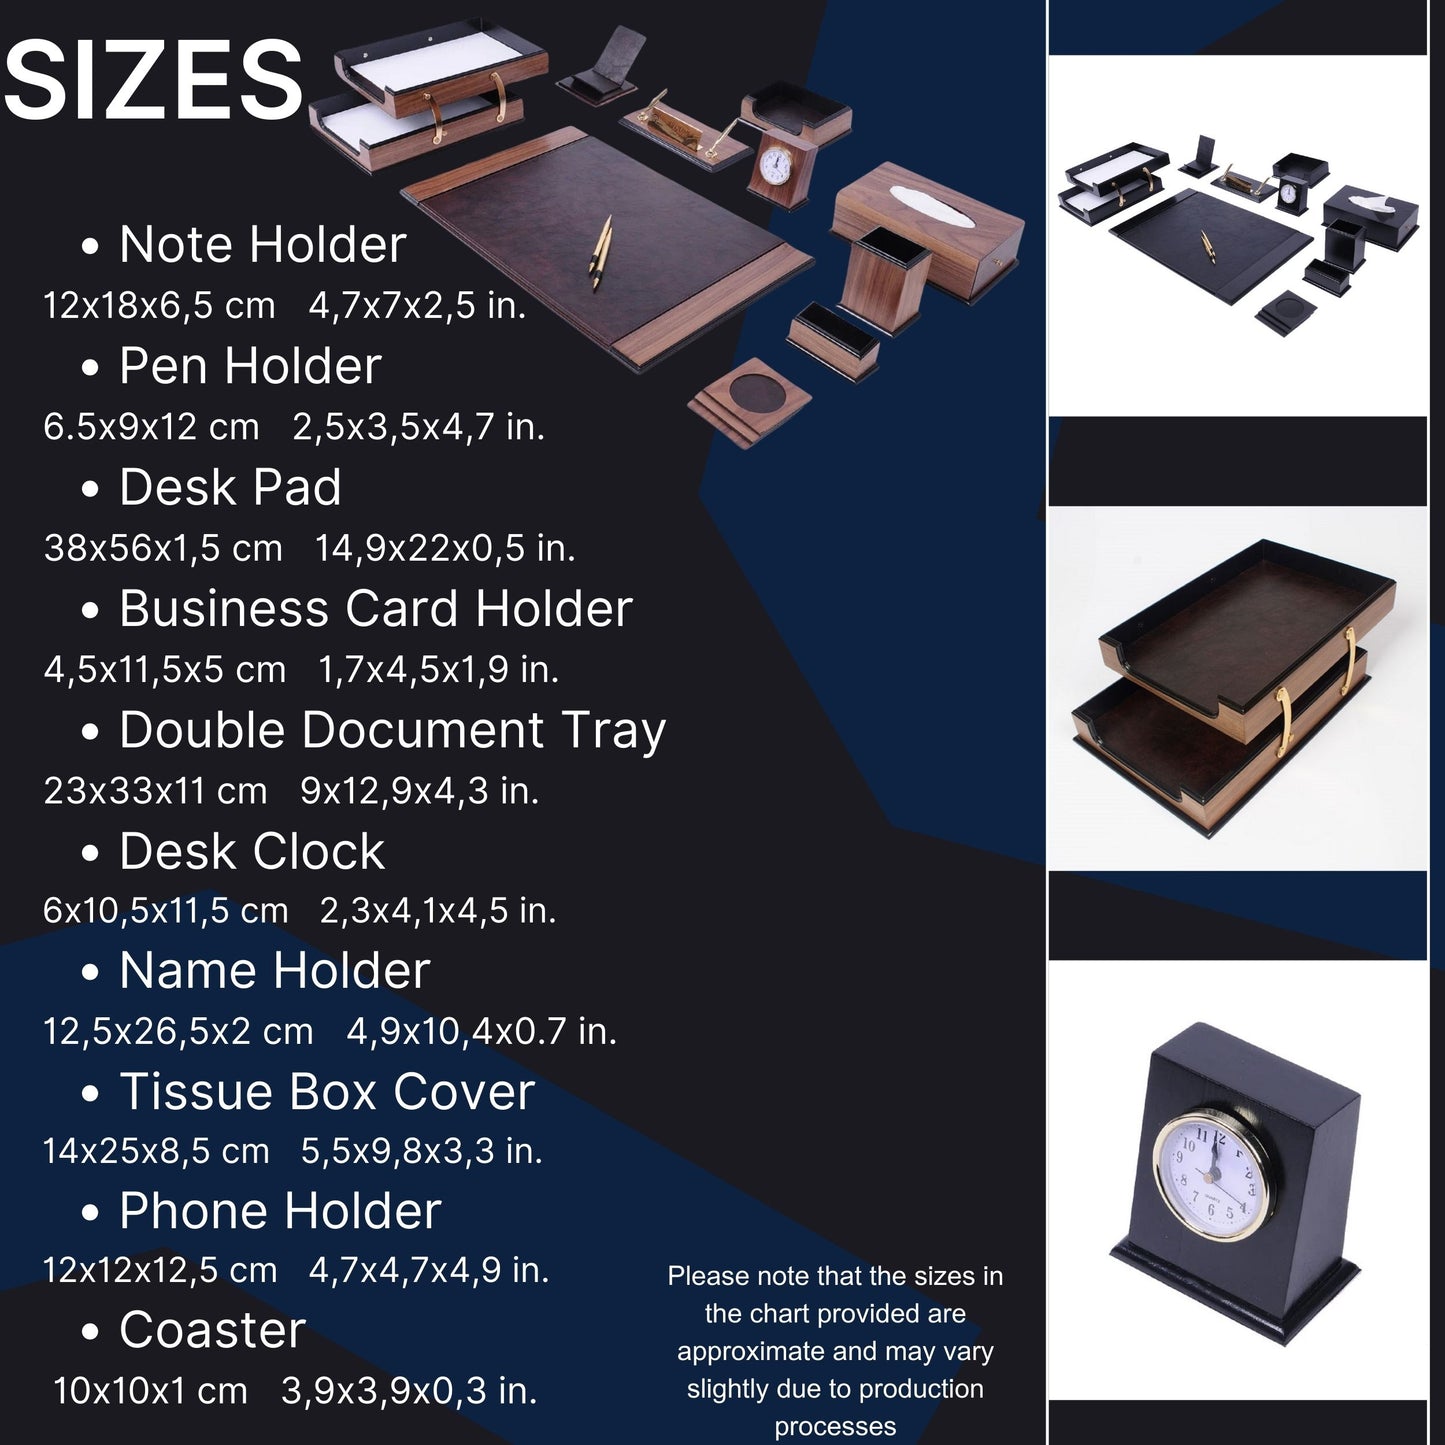 MOOG Wooden Prestige  Claret Desk Set - 8 PCS